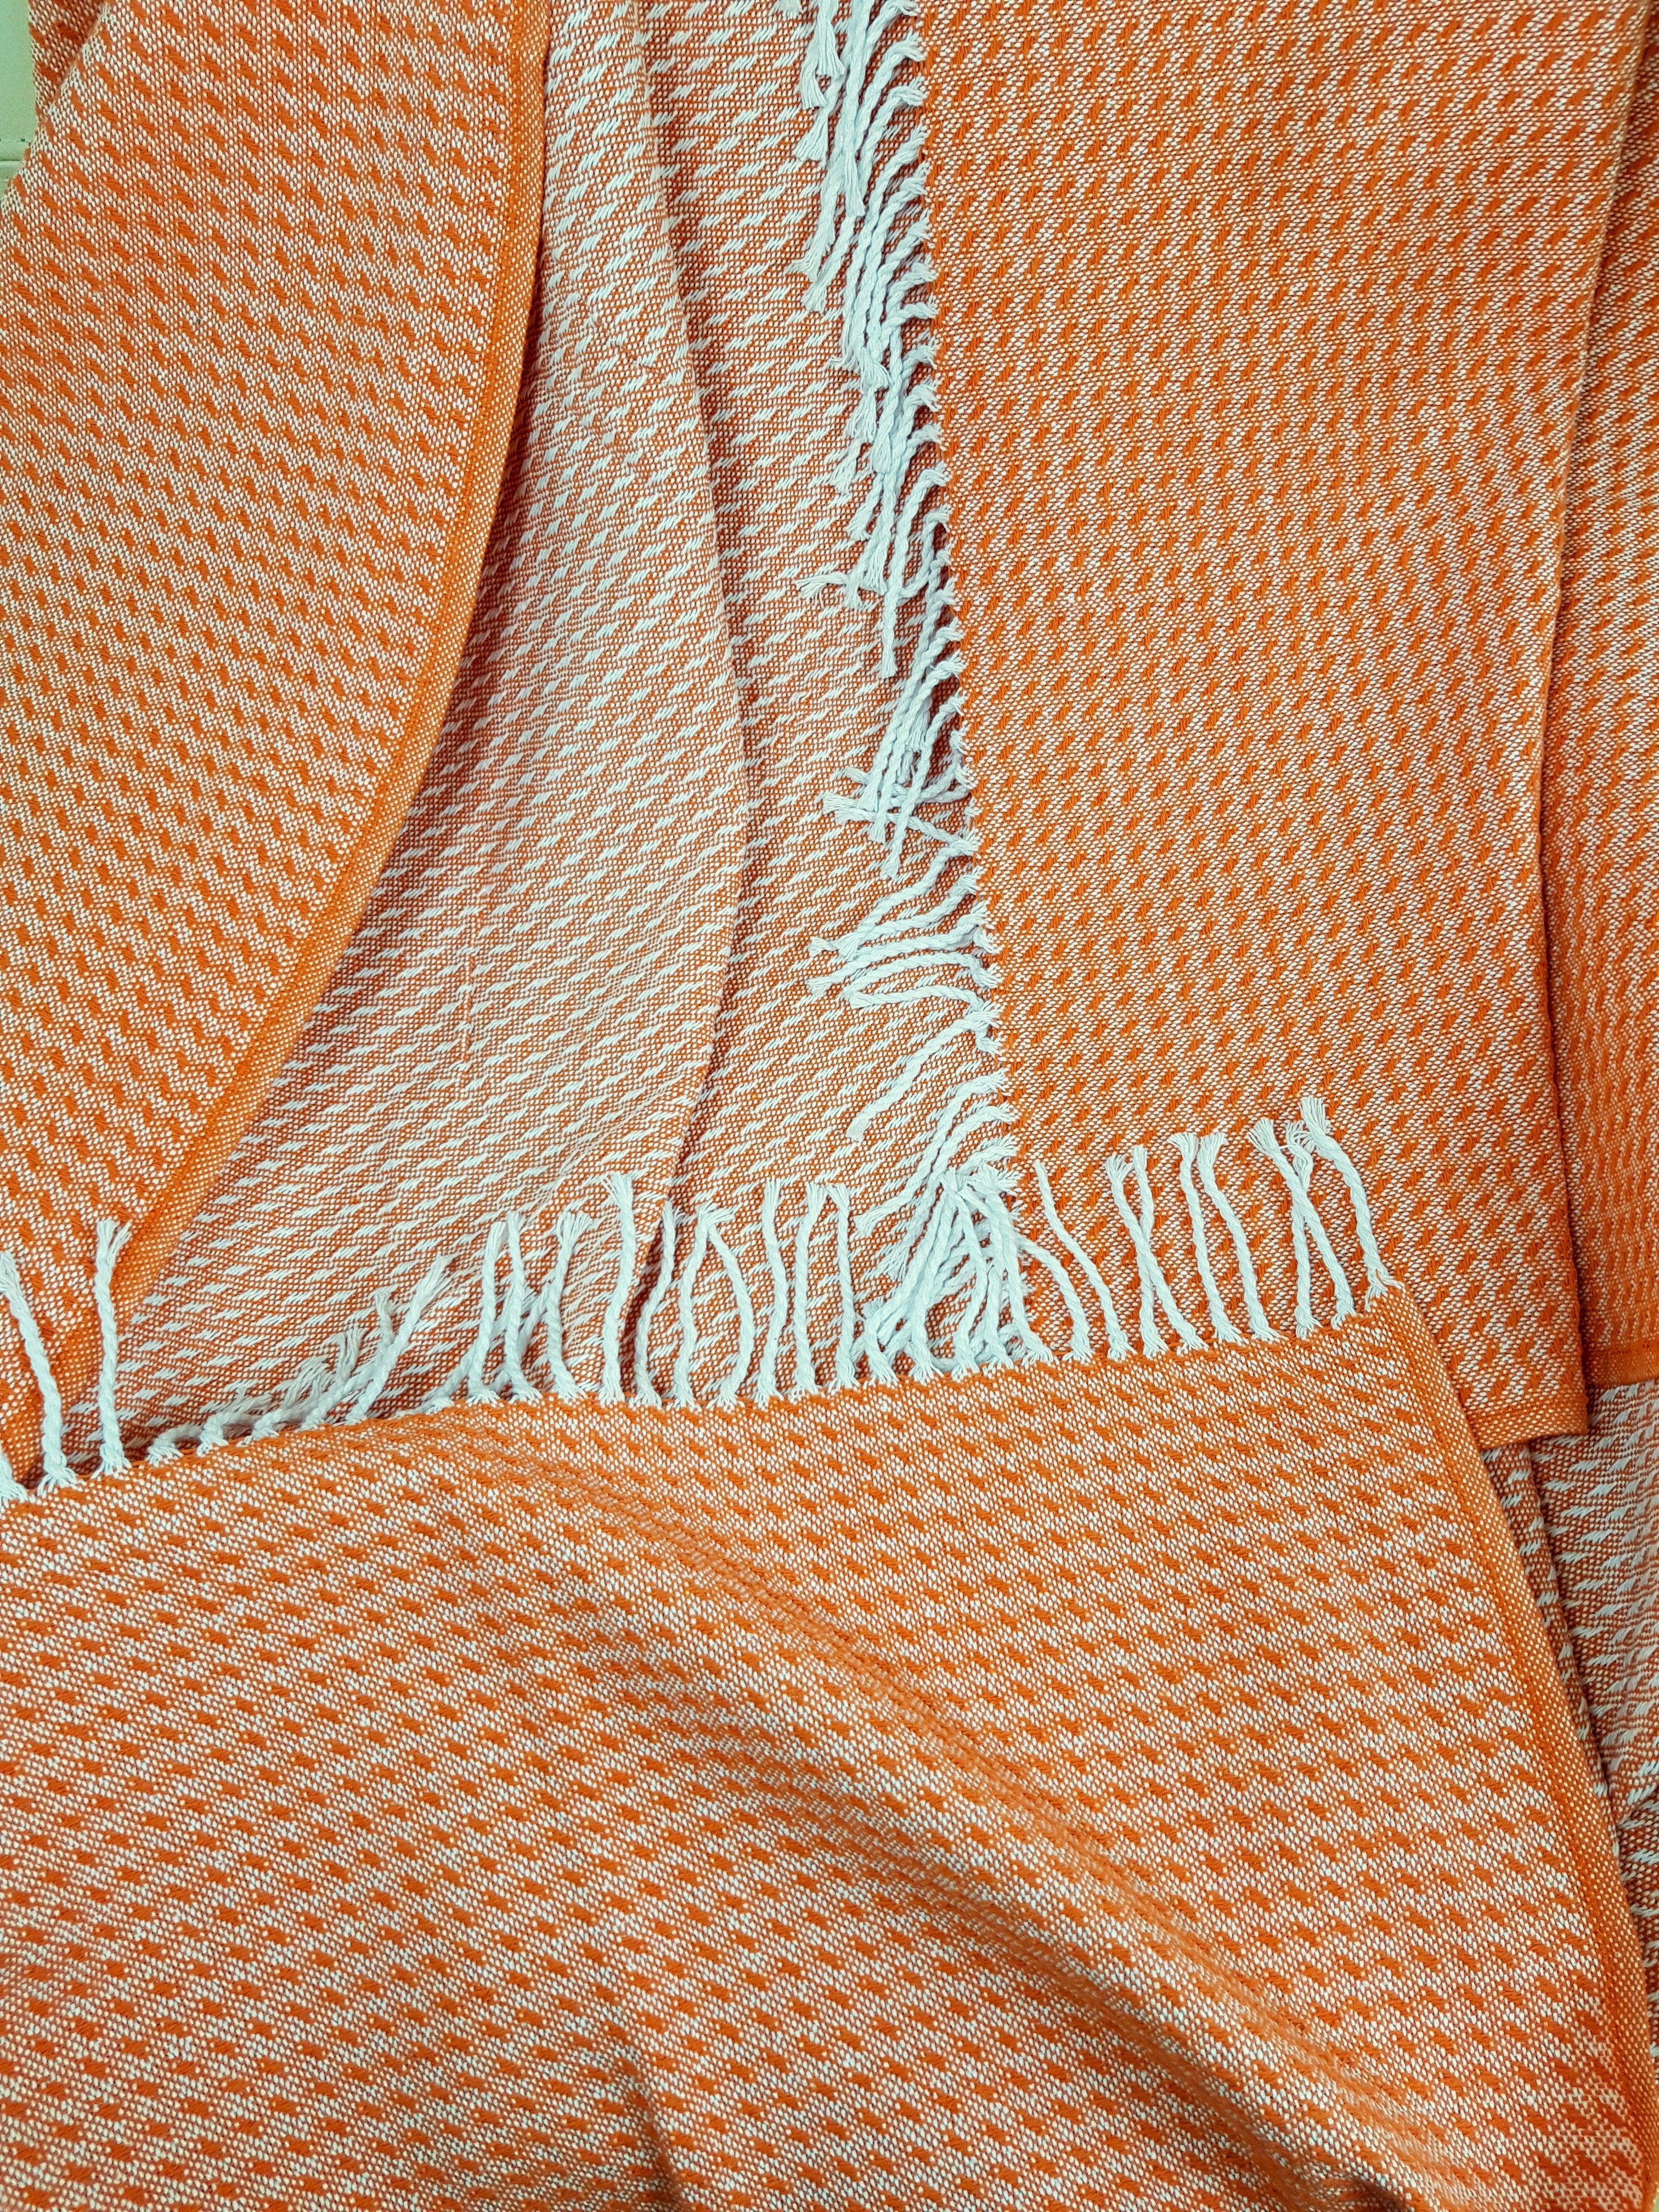 Baumwolldecke Wohndecke Tagesdecke "Malta-T", Plaid Decke Orange Wohndecke STTS